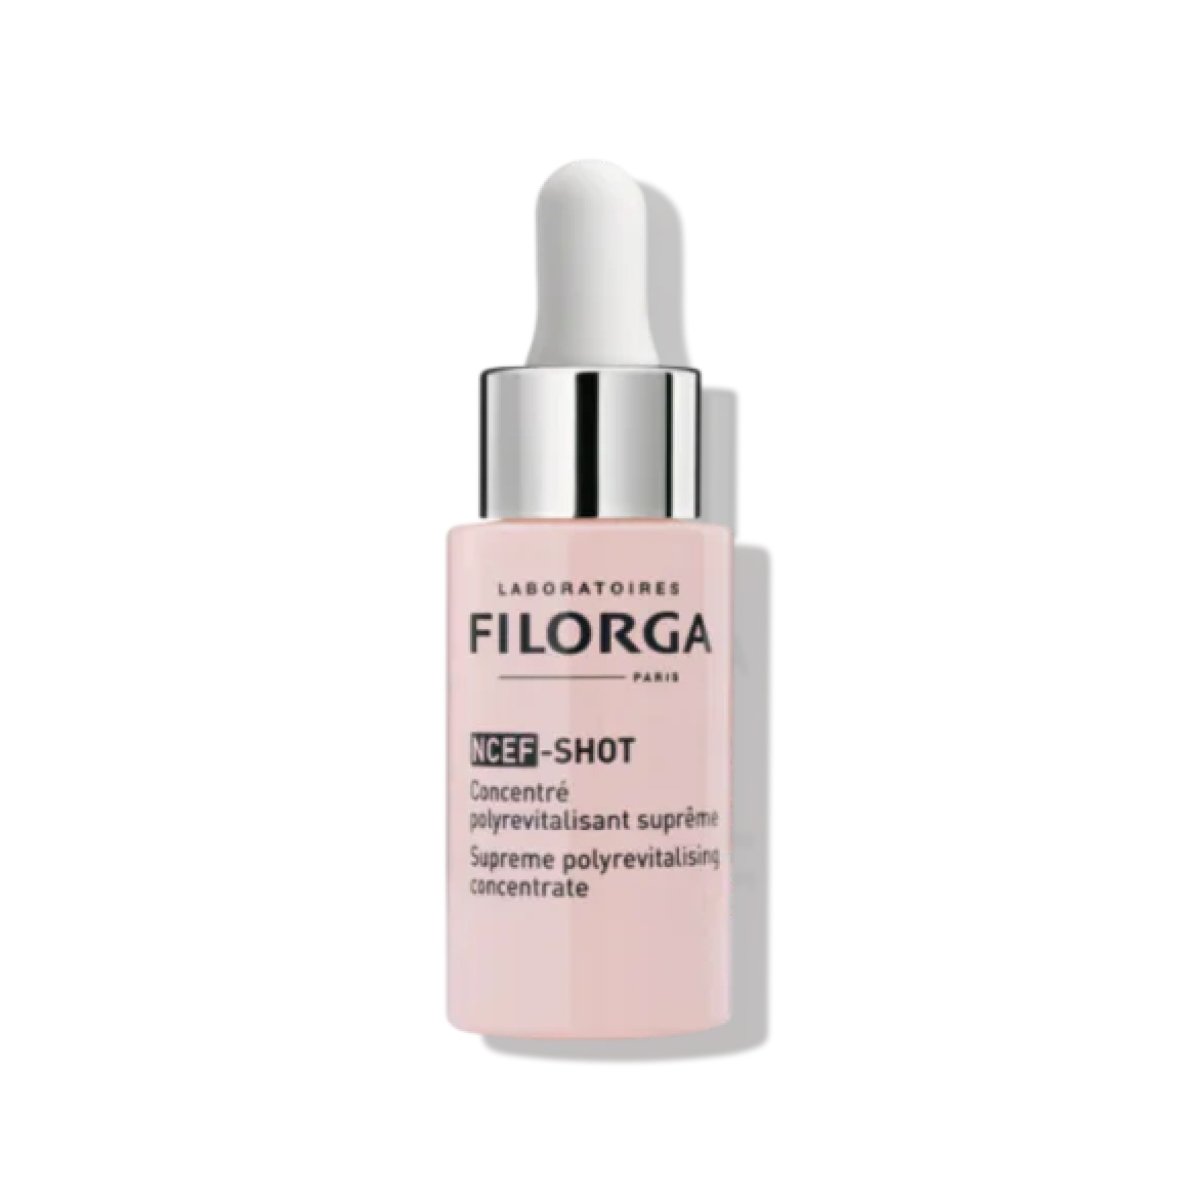 Filorga - NCEF-SHOT 15ml - 0.51 fl.oz - SkincareEssentials